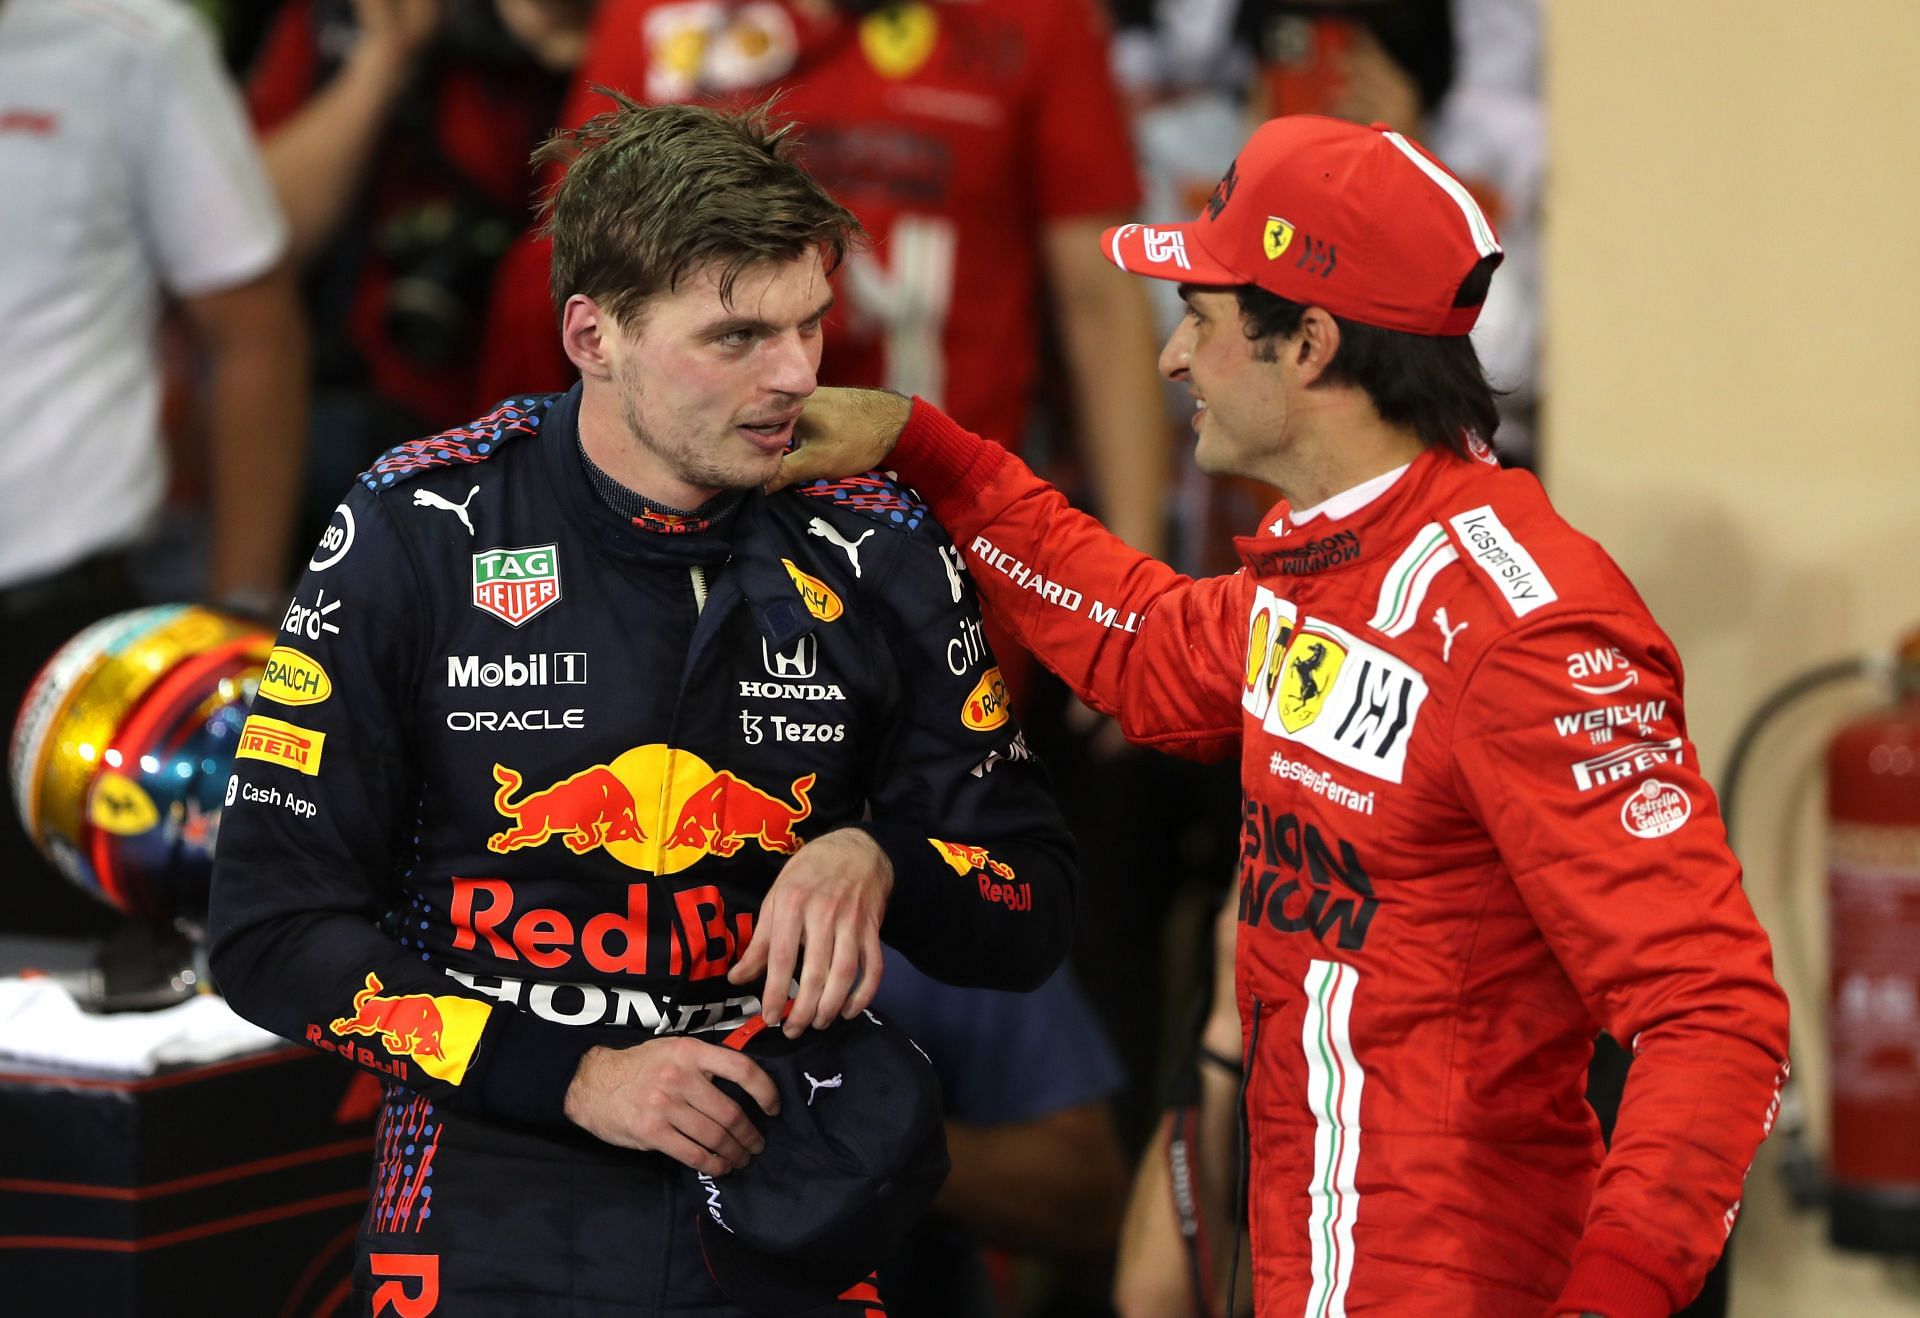 F1 Grand Prix of Abu Dhabi - Max Verstappen (left) is congratulated by Carlos Sainz